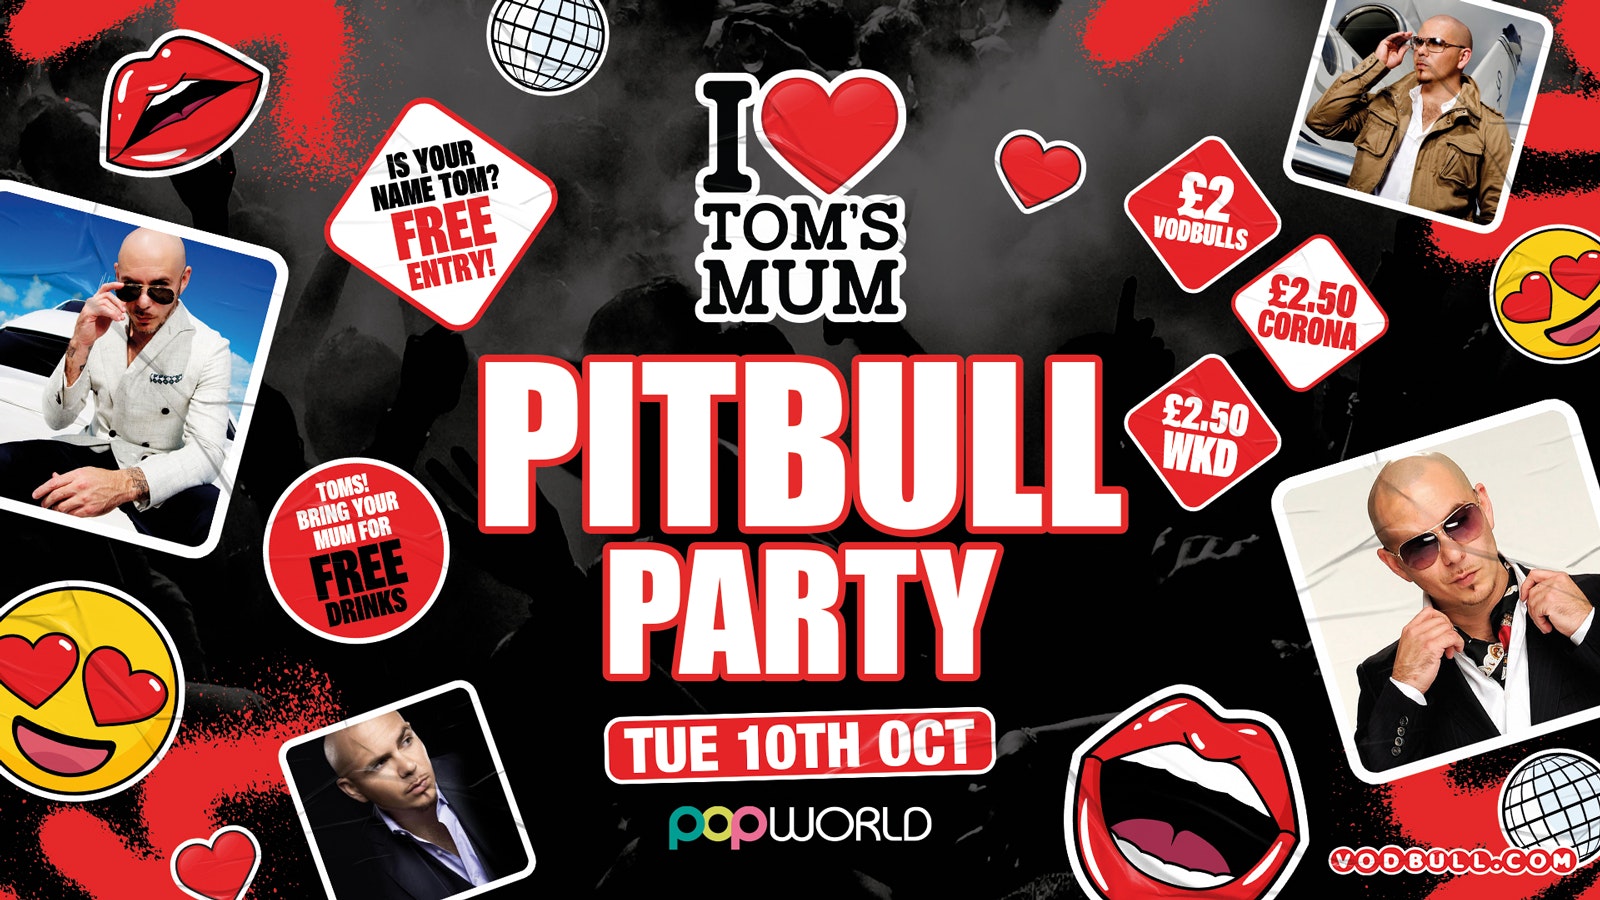 ❤️ The Tom’s Mum PITBULL PARTY ❤️ [TONIGHT!!] Tuesdays @ Popworld – 10/10